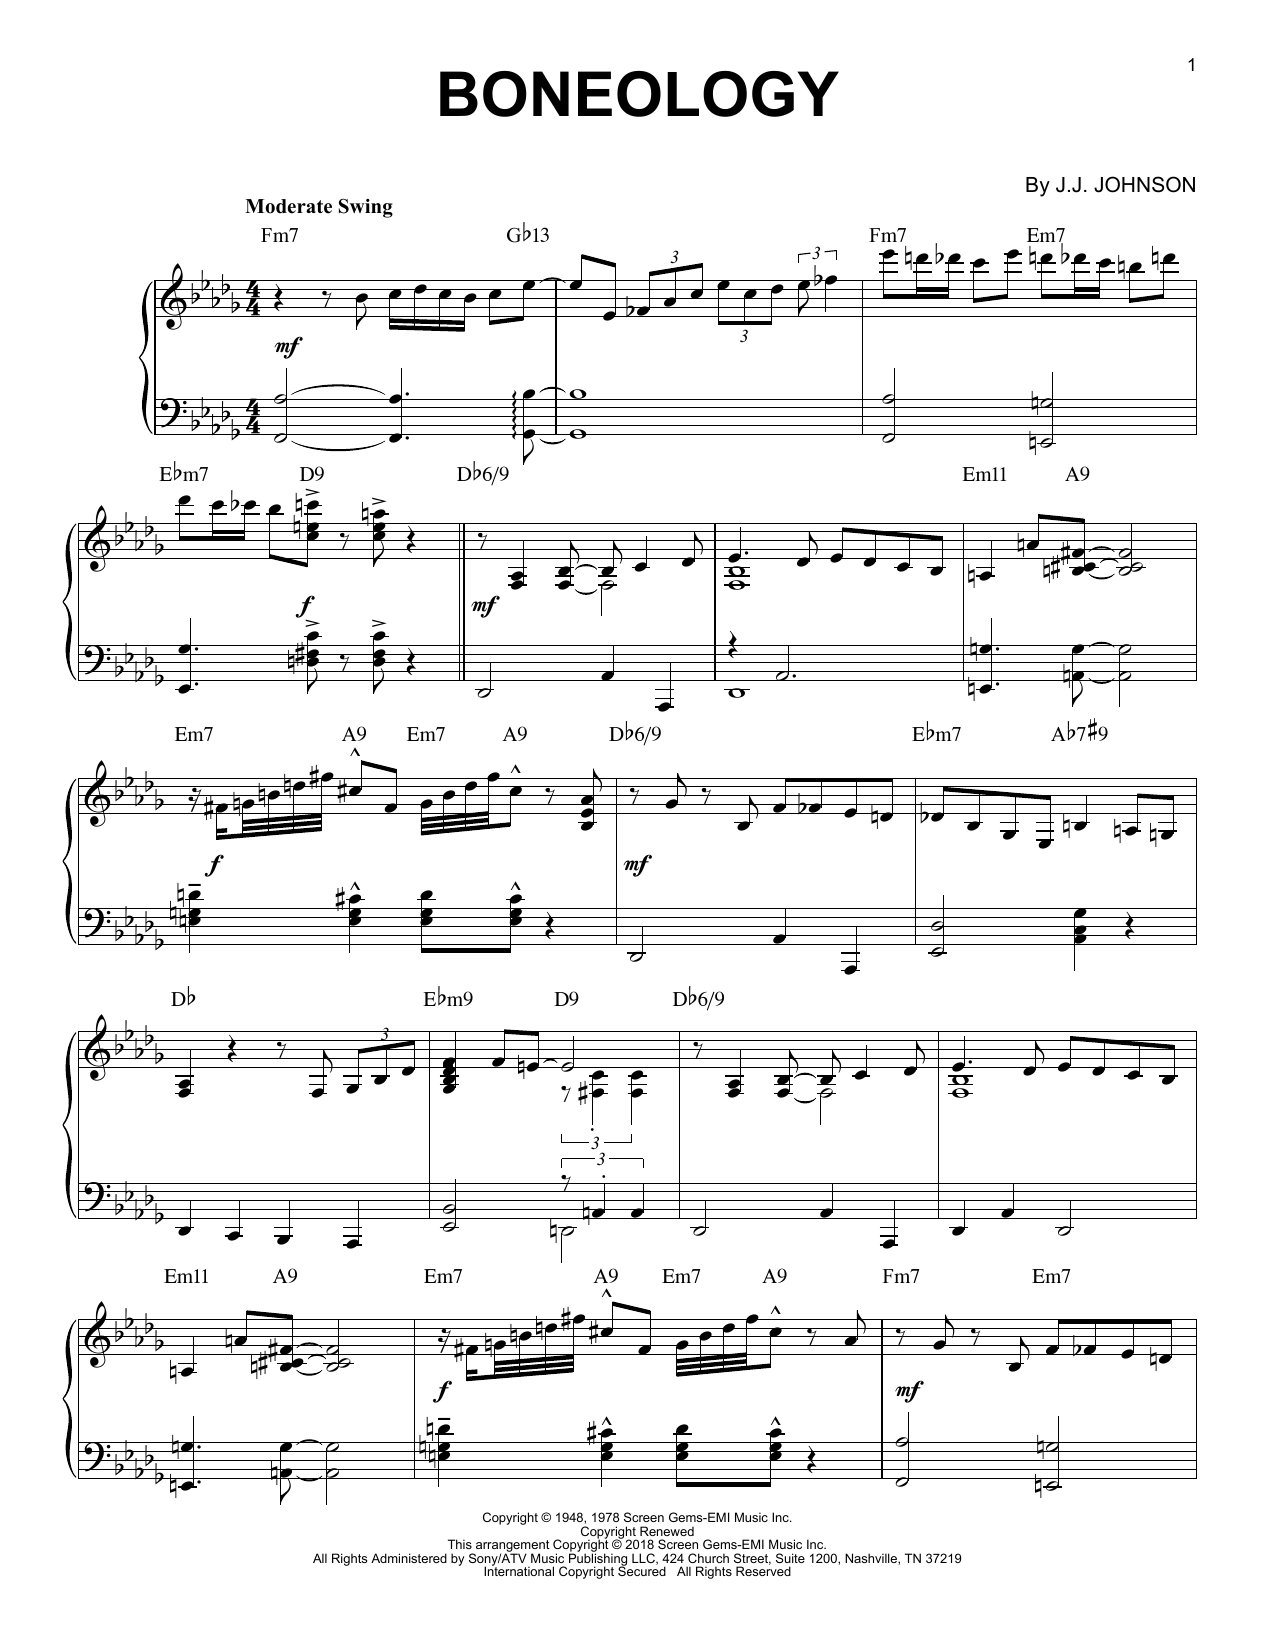 J.J. Johnson Boneology Sheet Music Notes & Chords for Piano - Download or Print PDF